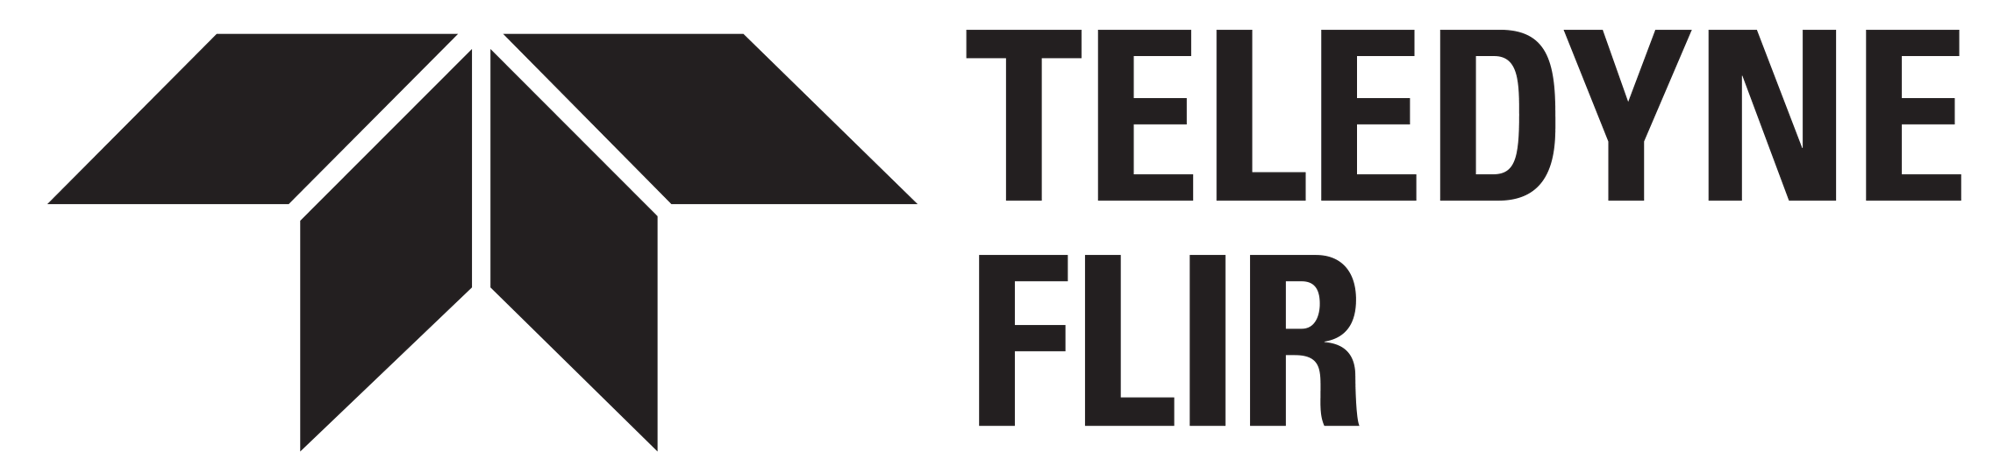 teledyne-flir_2-line-logo_black_without-everywhere-tagline